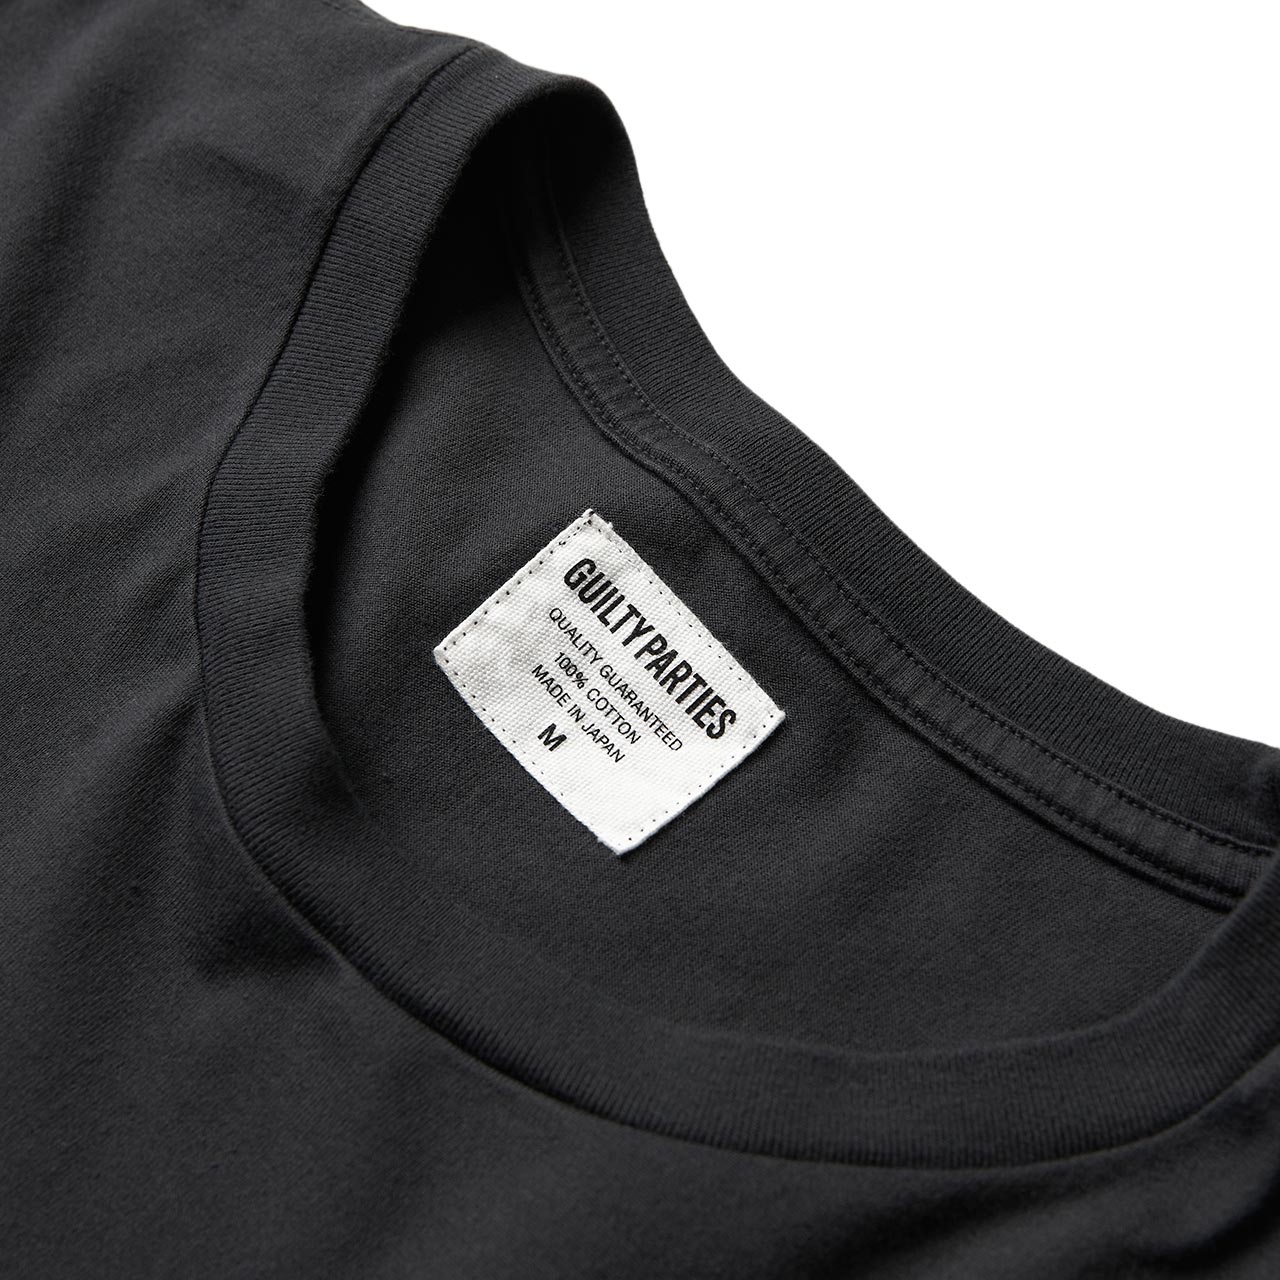 21SS-WMT-ST01 crew standard t-shirt (dark grey) maria wacko neck (type-1)